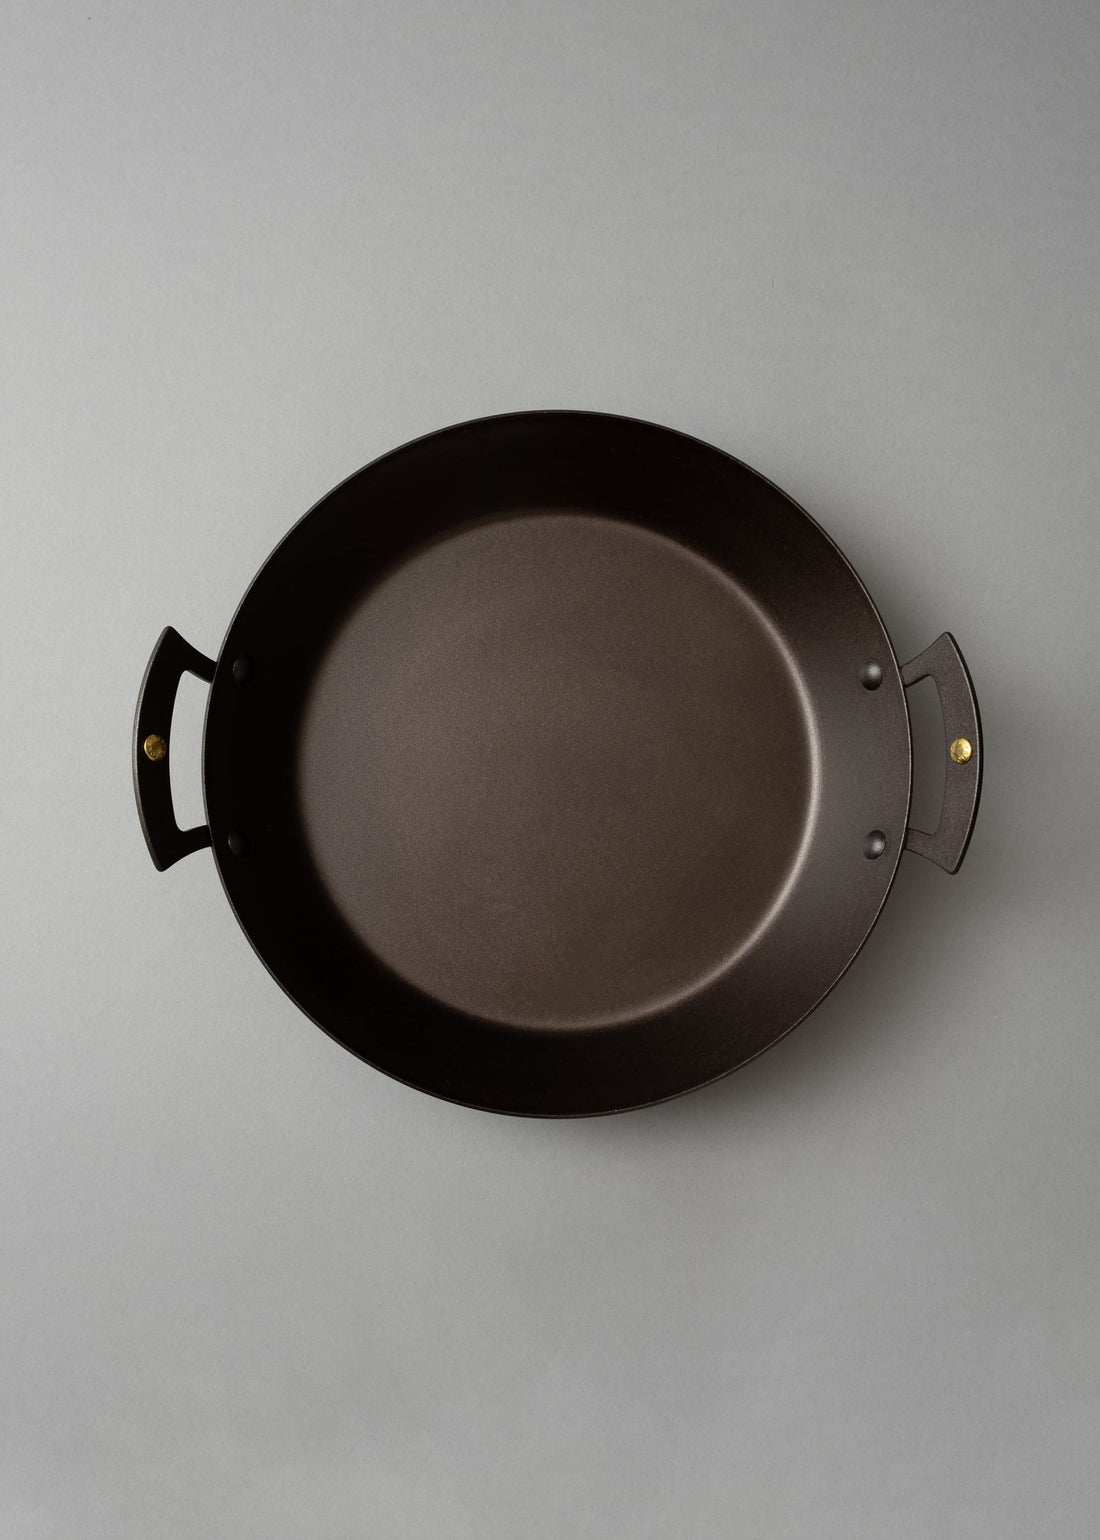 Poêle en « Fer noir repoussé » - PROSPECTOR PAN - ⌀ 31 cm - Netherton Foundry